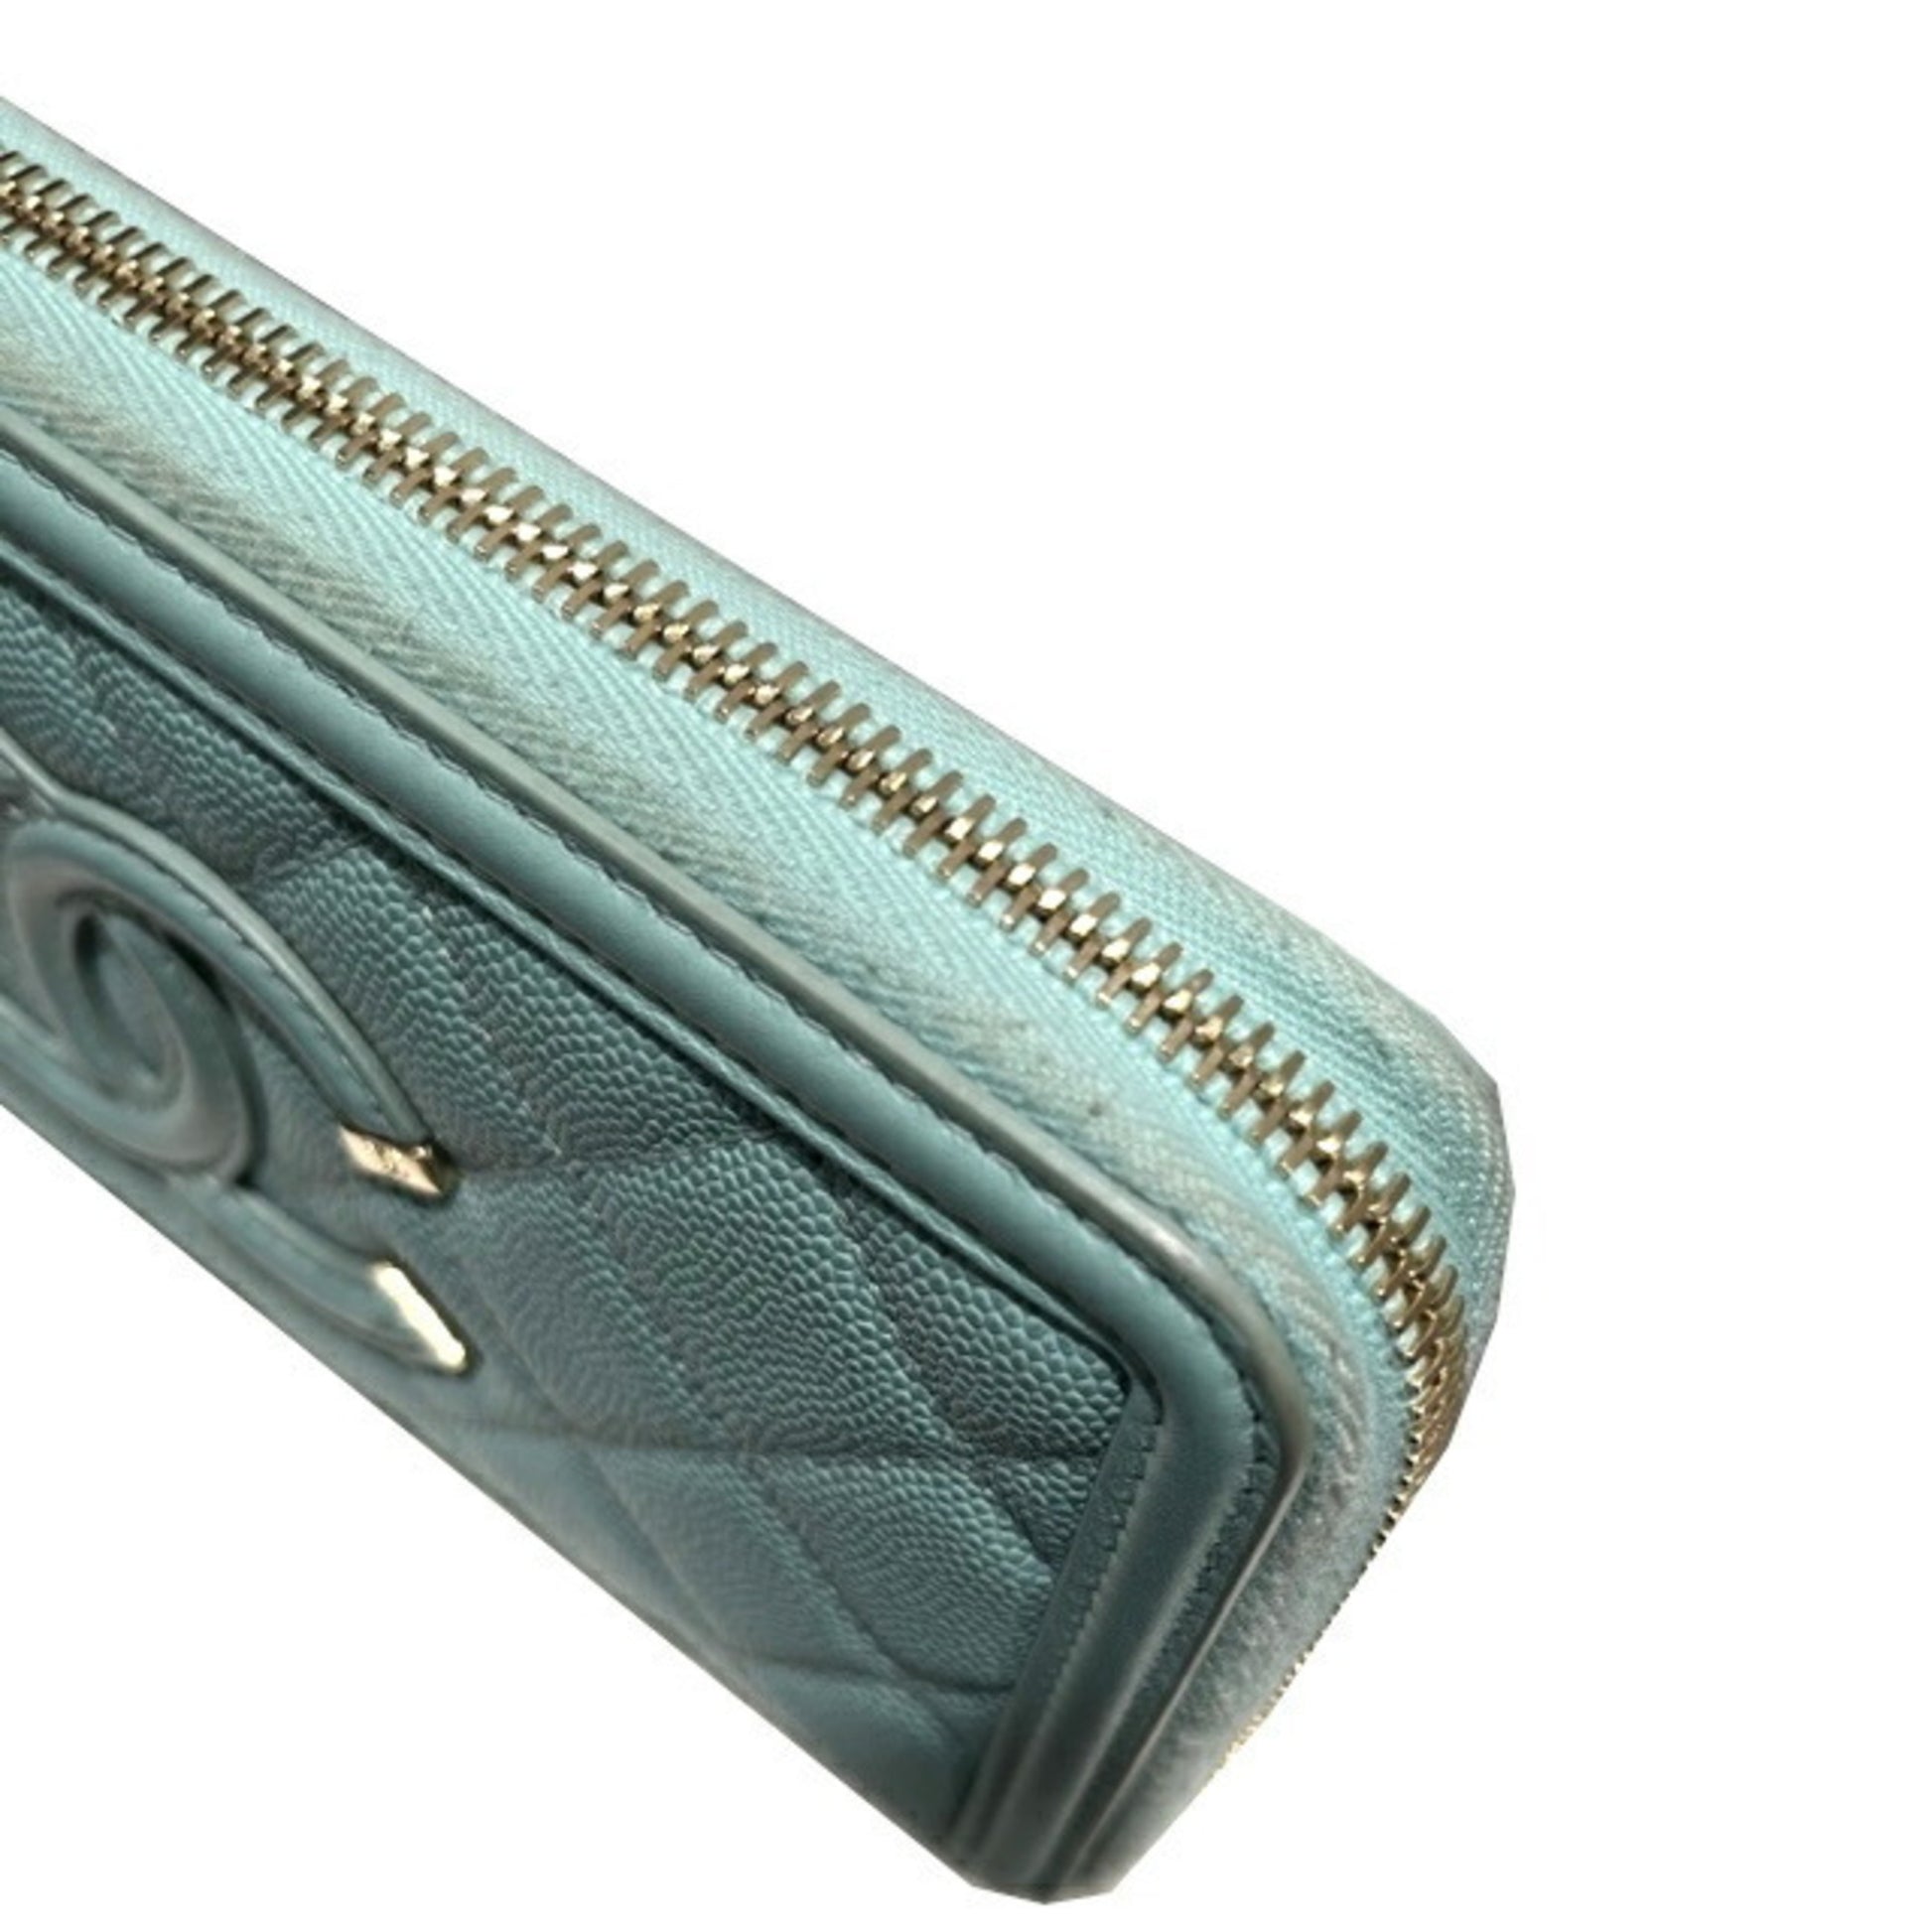 Chanel CC Filigree WOC Wallet On Chain Caviar Bag Black